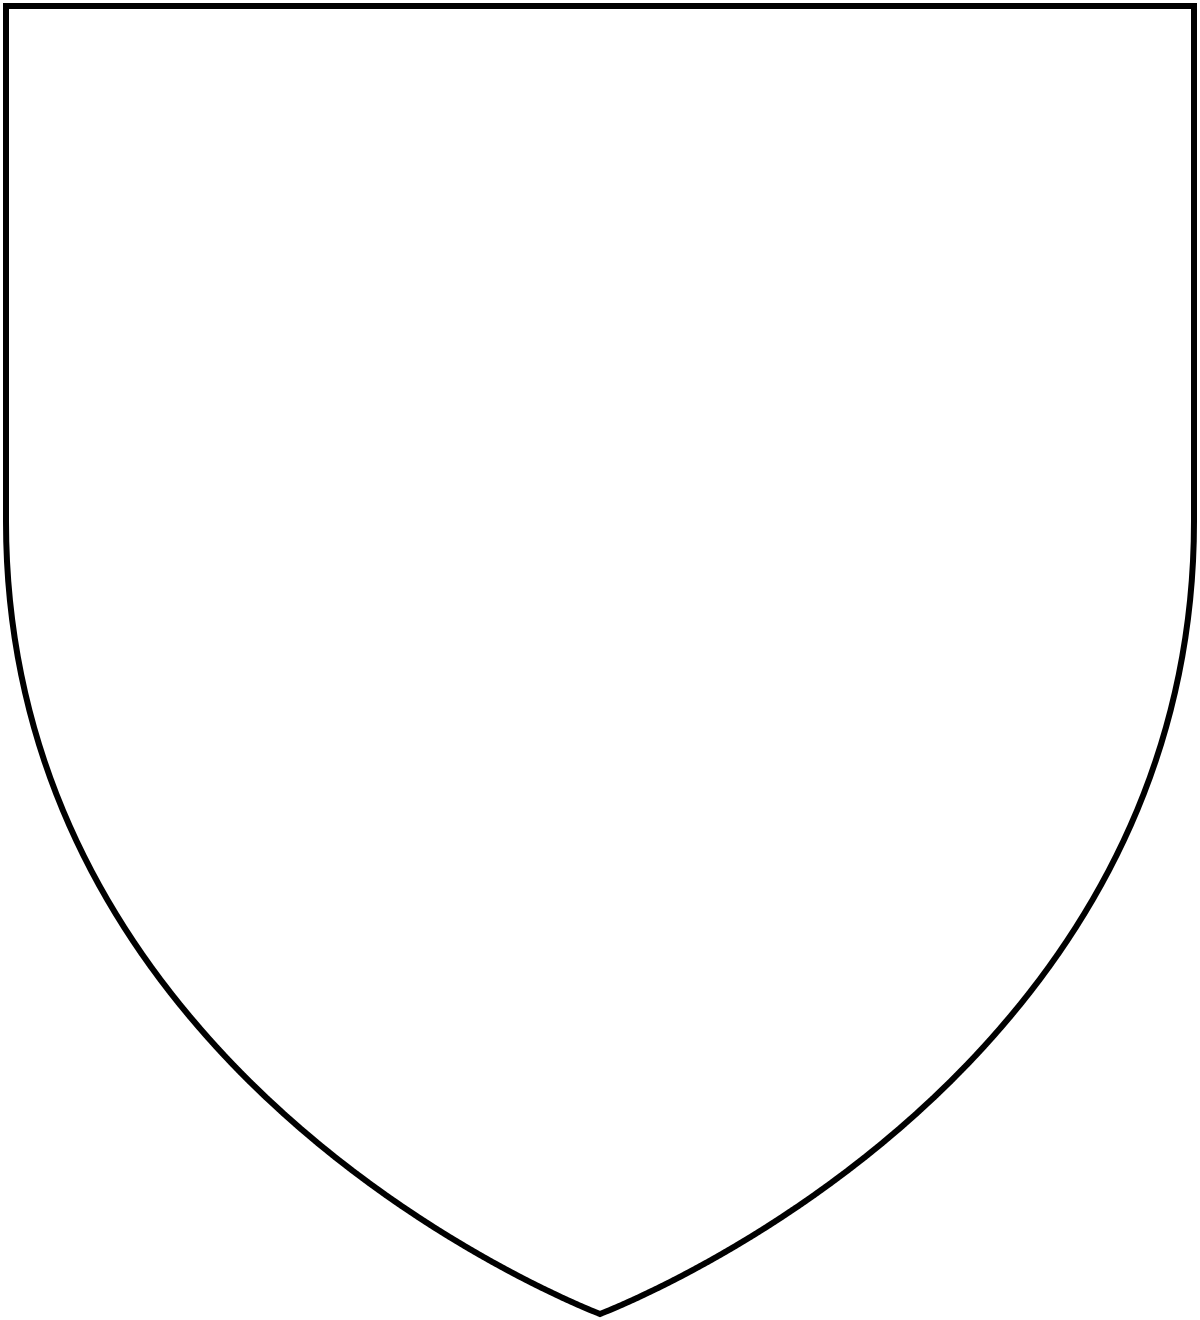 File:Heraldic shield shape 600x660.svg - Wikipedia